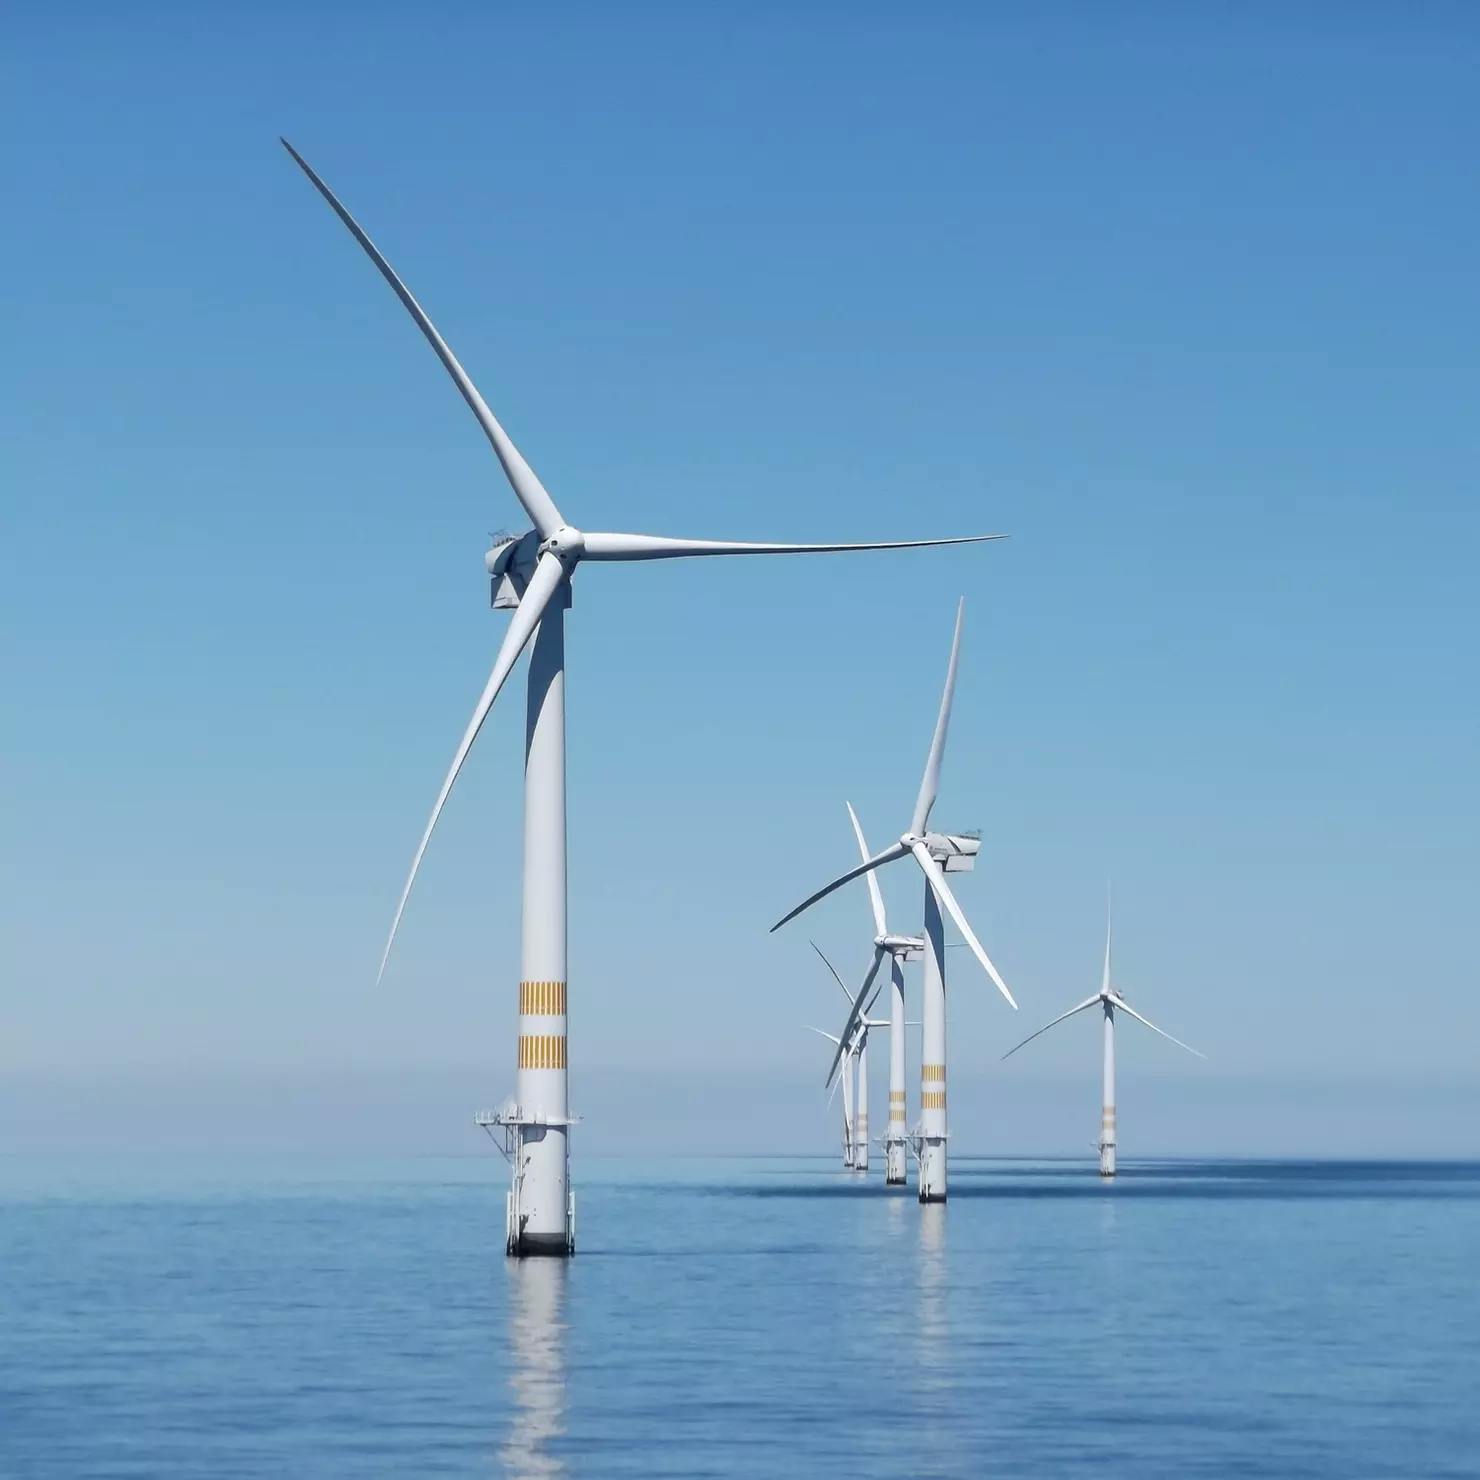 Offshore wind farm, Arklow Bank, Southern Ireland.
Renewables Windfarm3